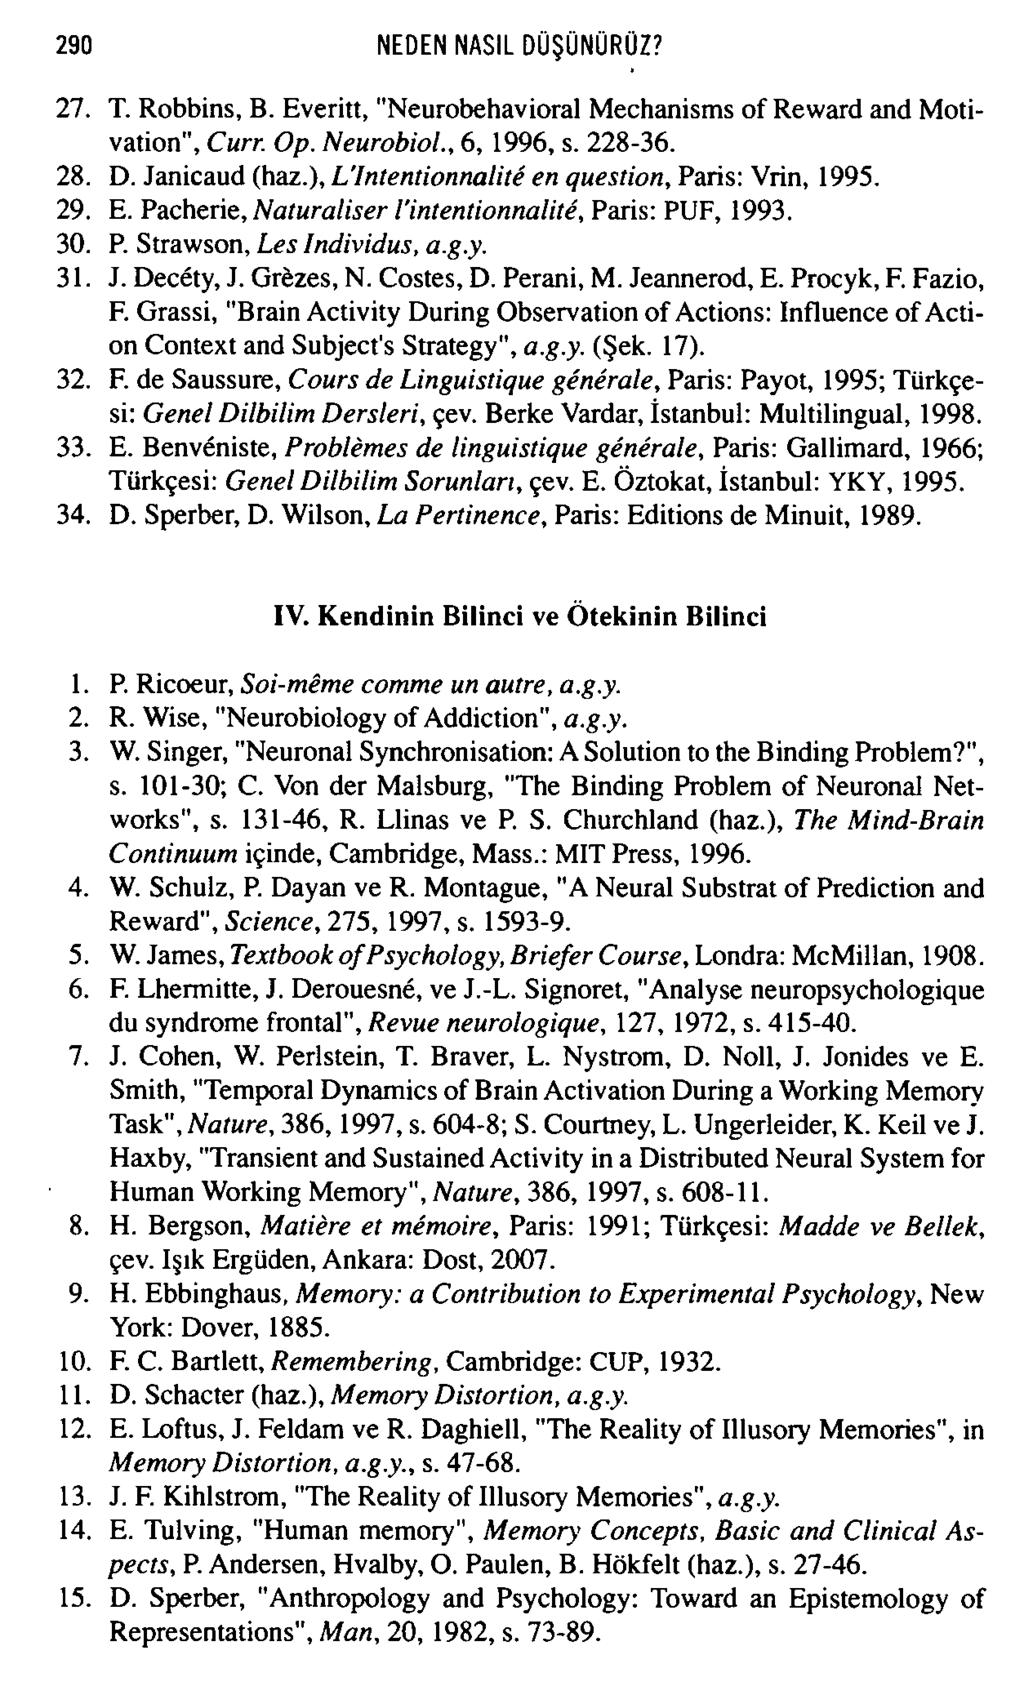 27. T. Robbins, B. Everitt, "Neurobehavioral Mechanisms of Revvard and Motivation", Curr. Op. Neurobiol., 6, 1996, s. 228-36. 28. D. Janicaud (haz.), L'Intentionnalite en question, Paris: Vrin, 1995.